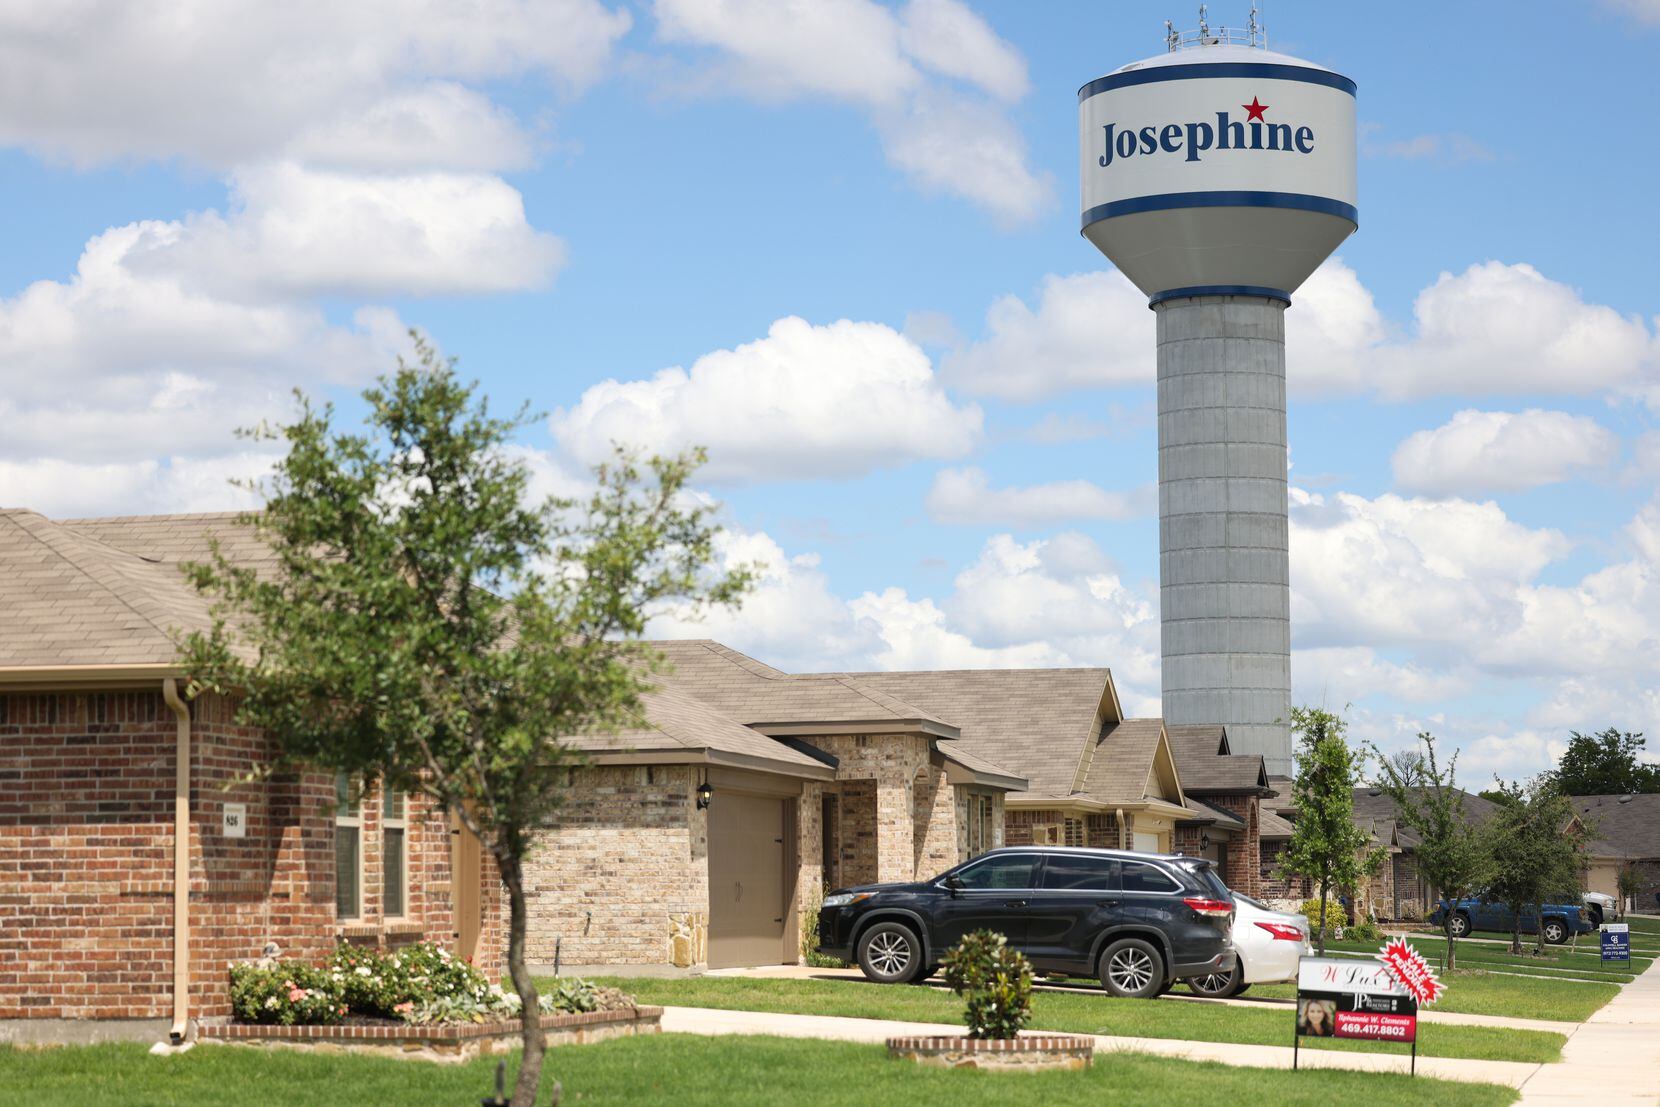 The city of Josephine’s newest water tower overlooks the Magnolia housing development.